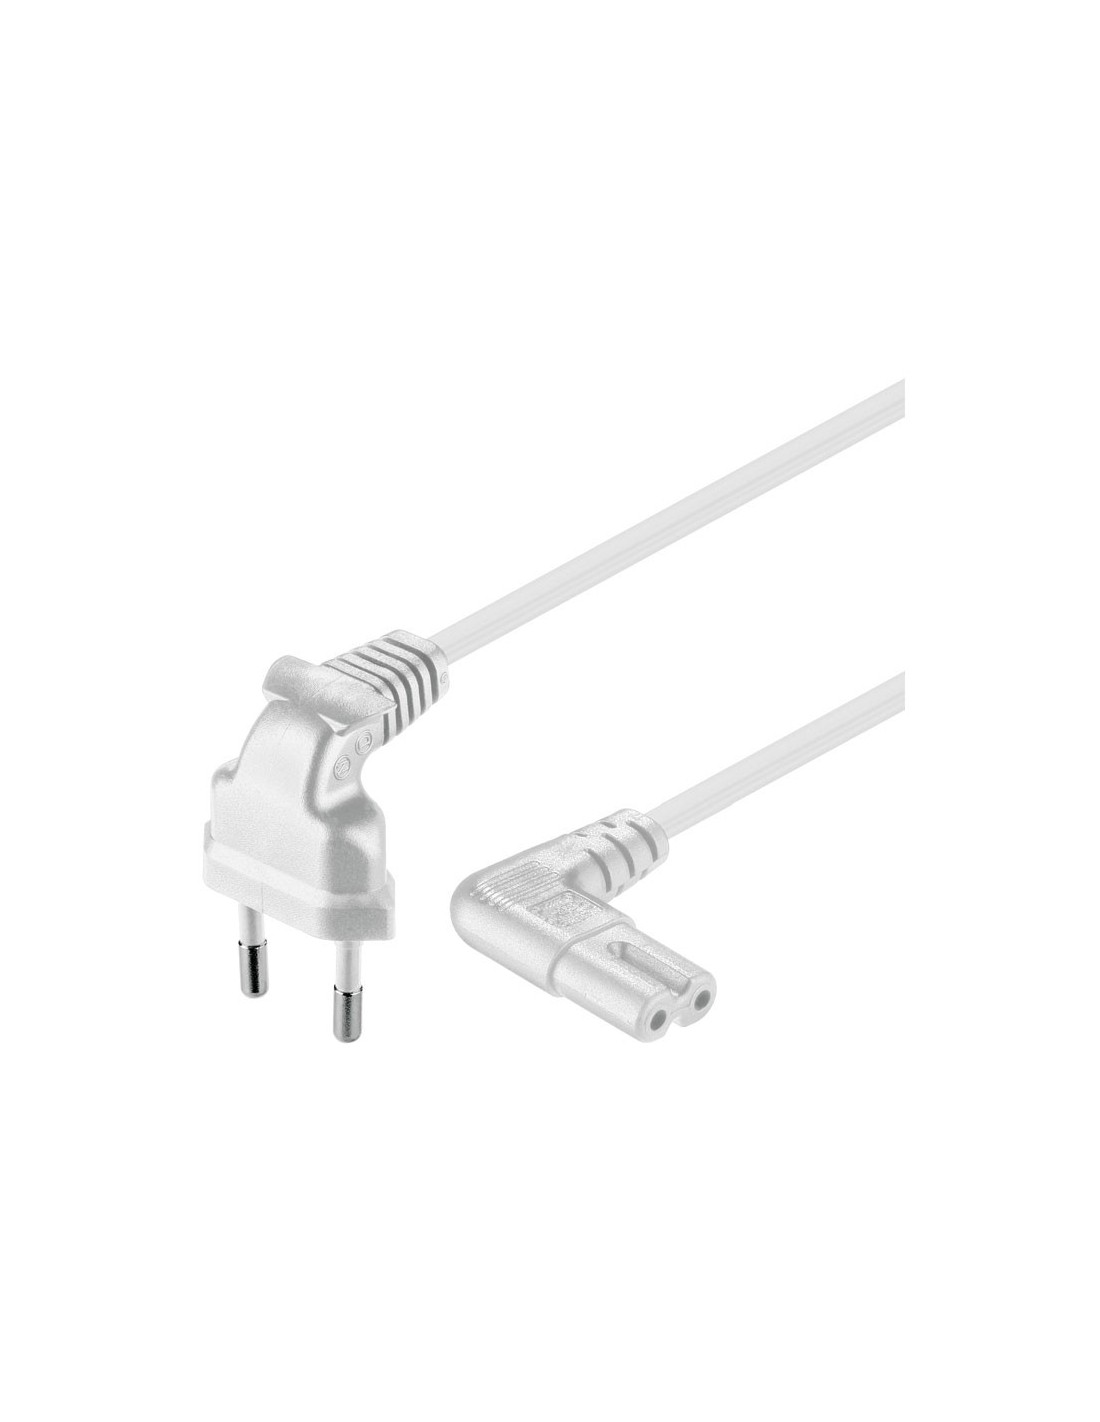 Cable alimentación 3Mts CEE 7/16 A IEC C7